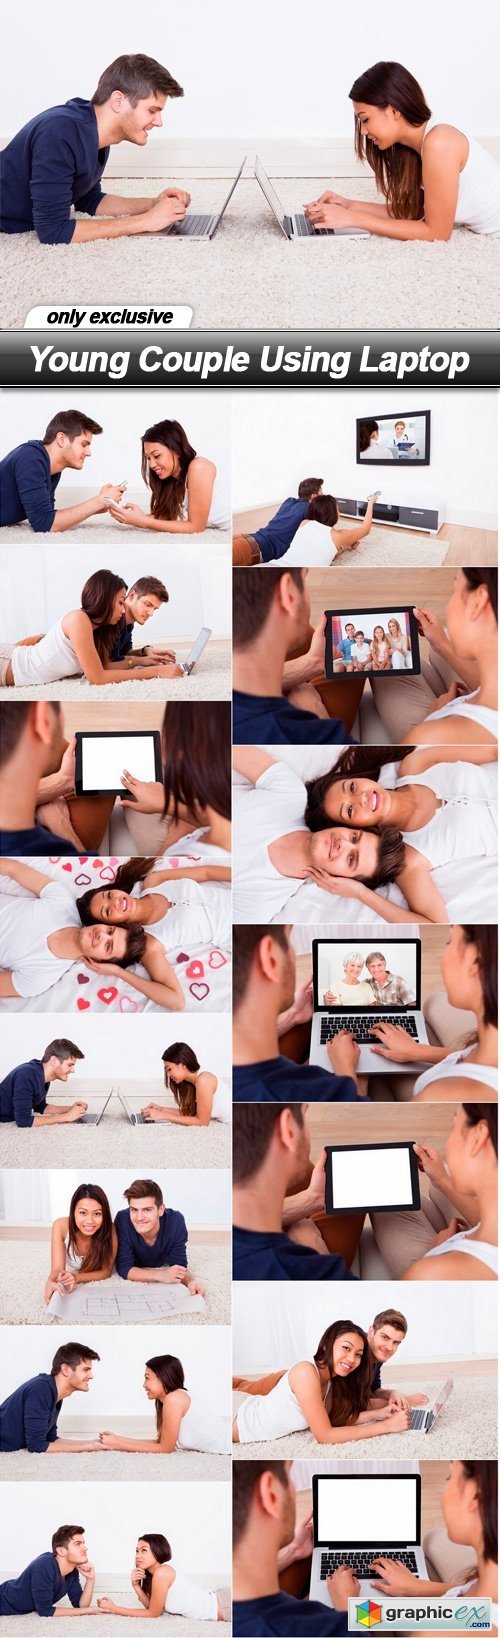 Young Couple Using Laptop - 15 UHQ JPEG